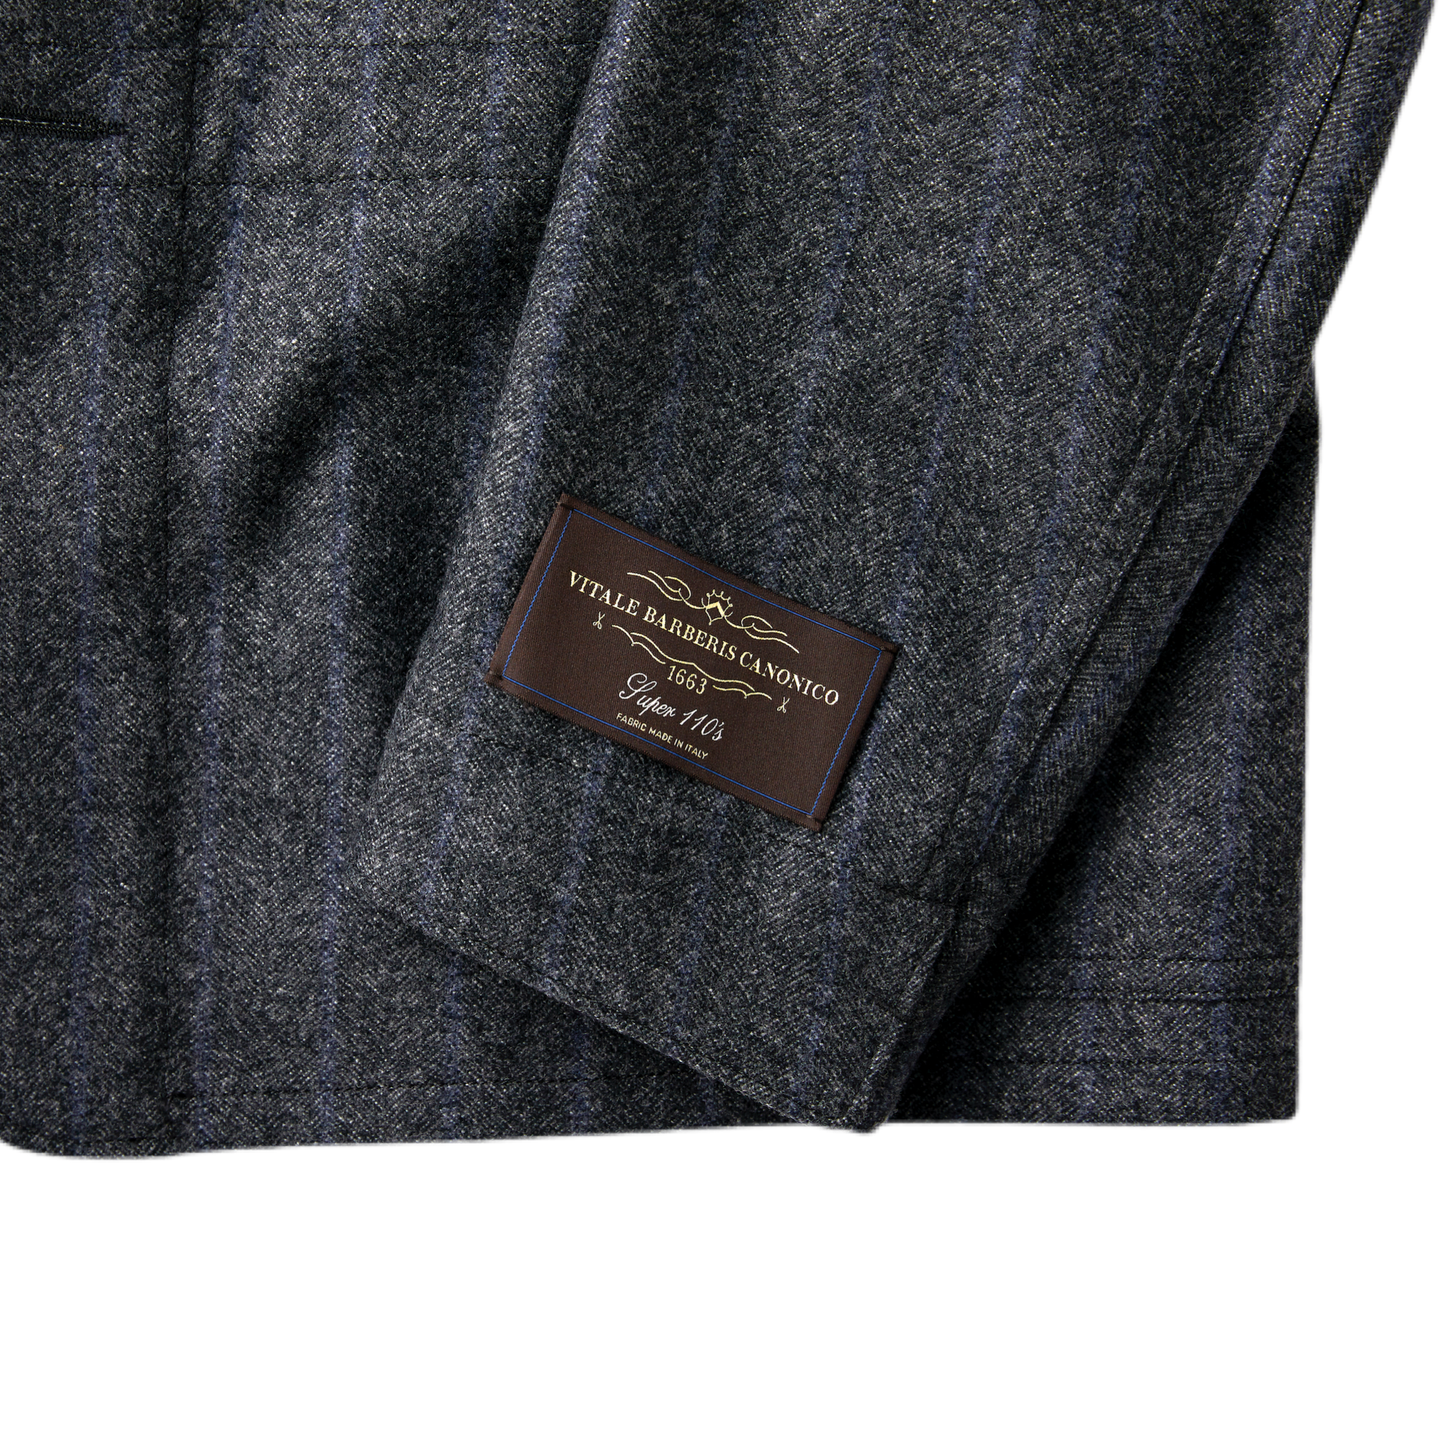 COLONY CLOTHING / Canonico ウール ジャケット / CC2102-JK01-05